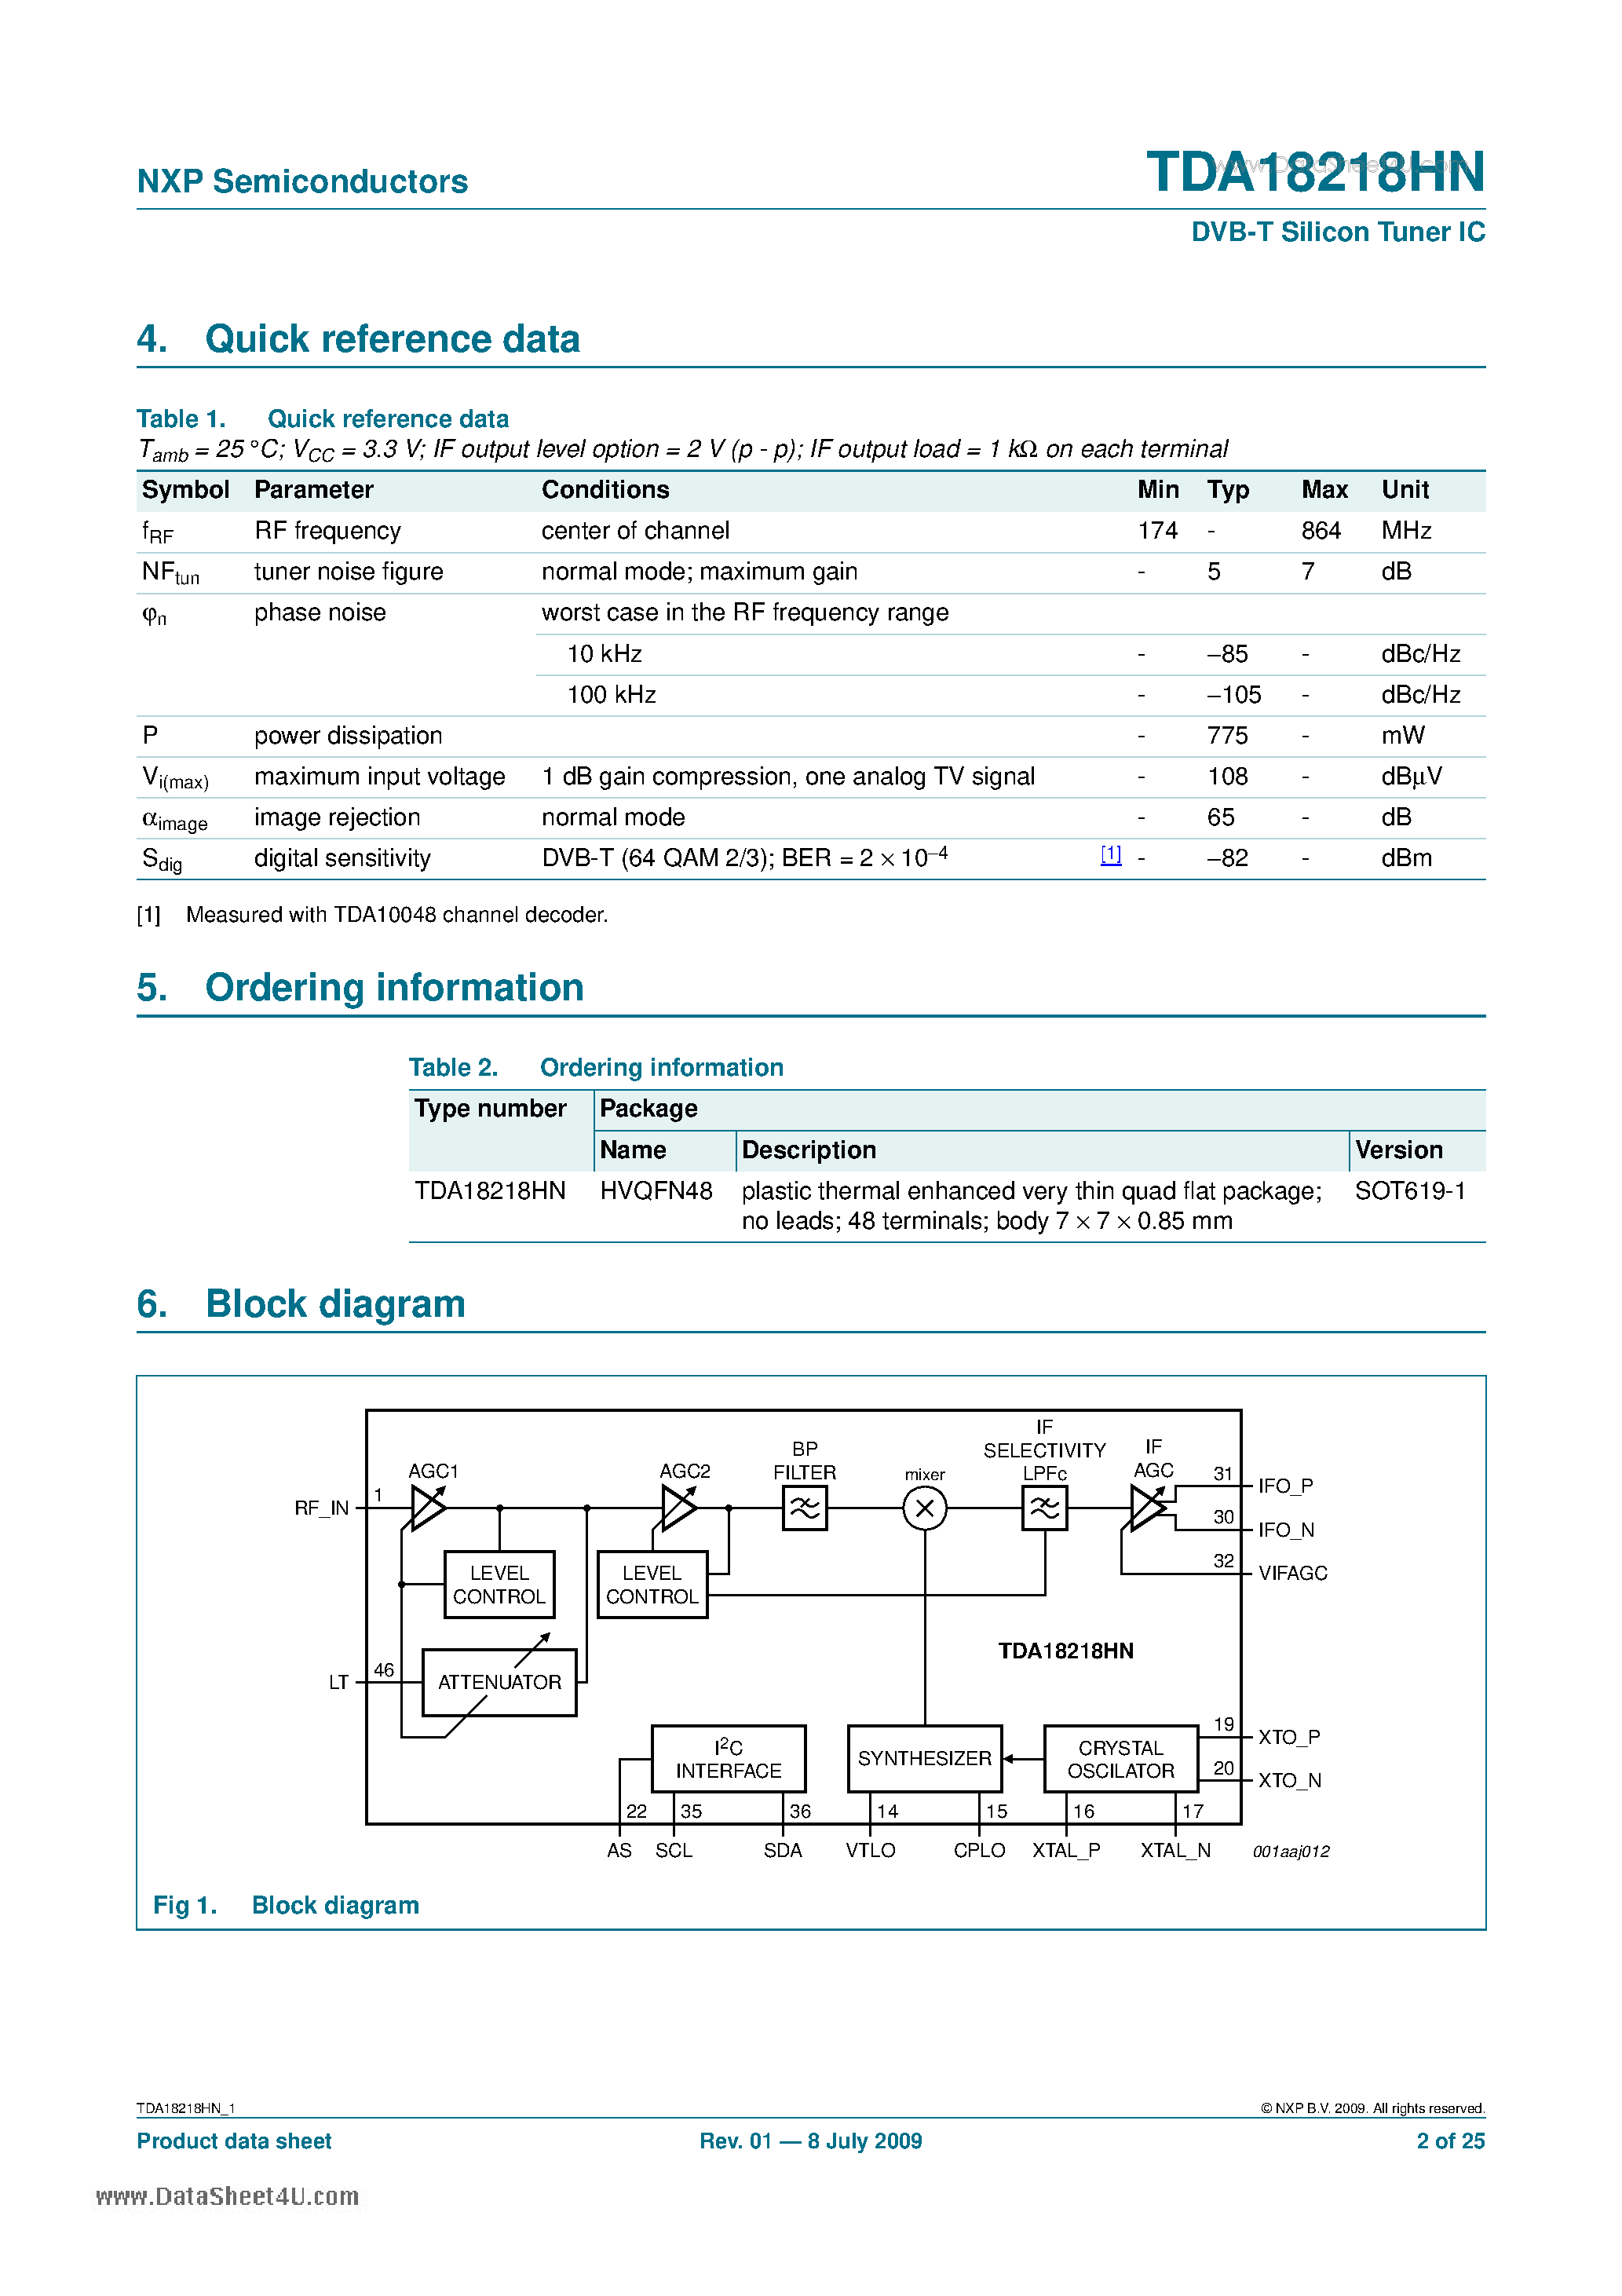 Datasheet TDA18218HN - DVB-T Silicon Tuner IC page 2